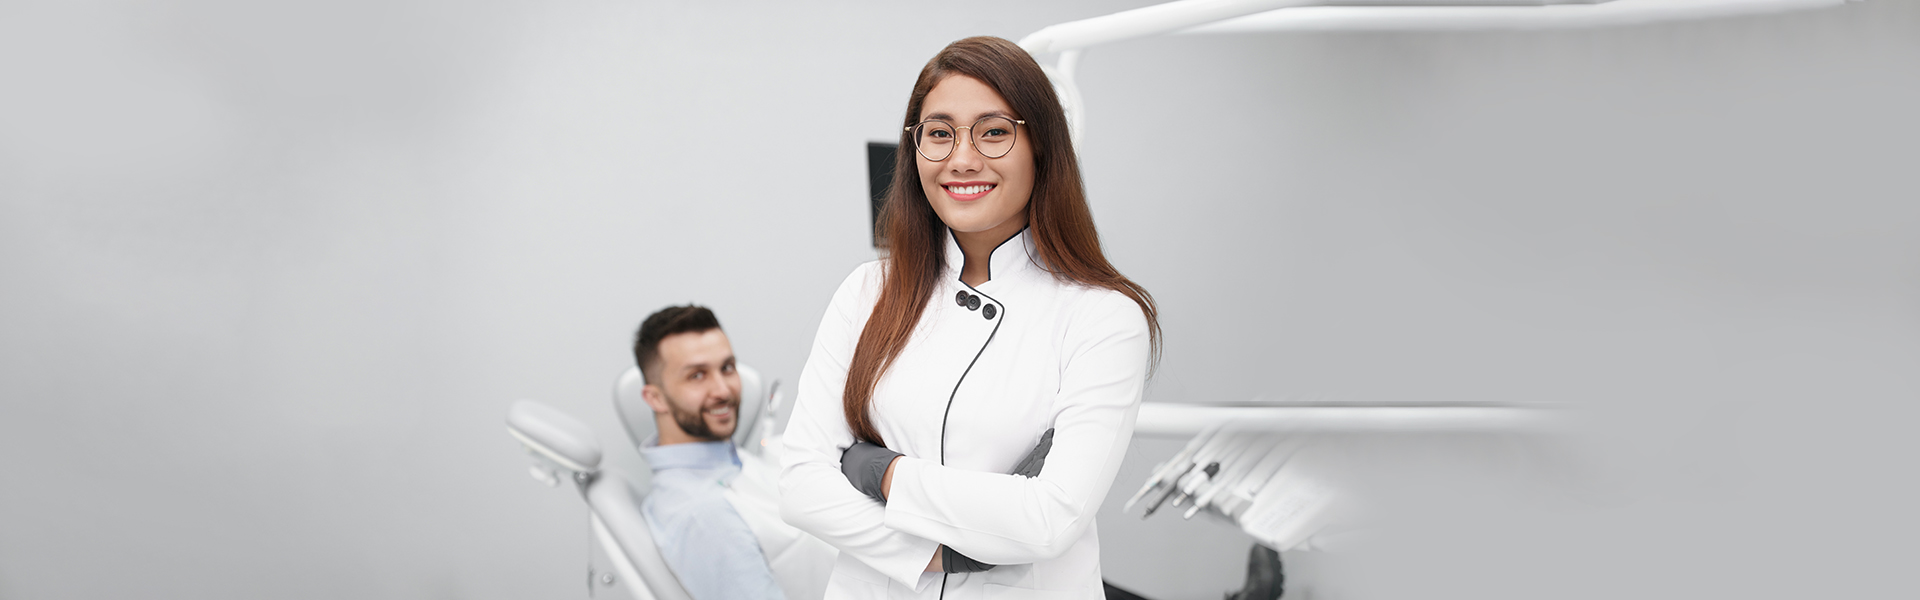 How Often Should You Visit the Dentist for Regular Check-Ups?